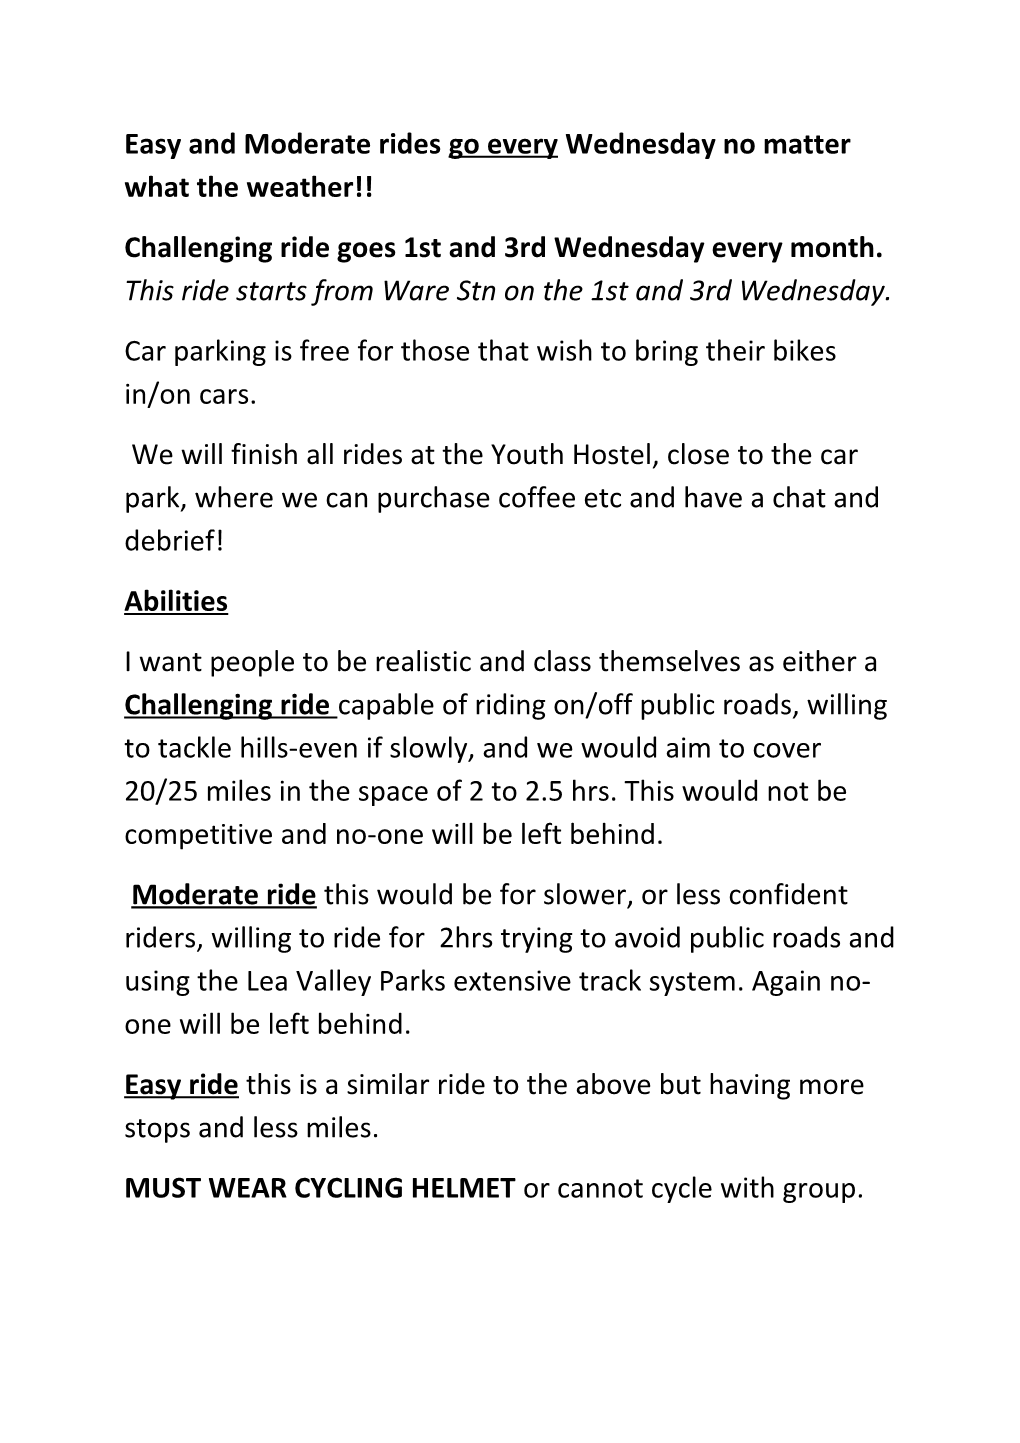 Cheshunt U3a Cycle Group Info Sheet